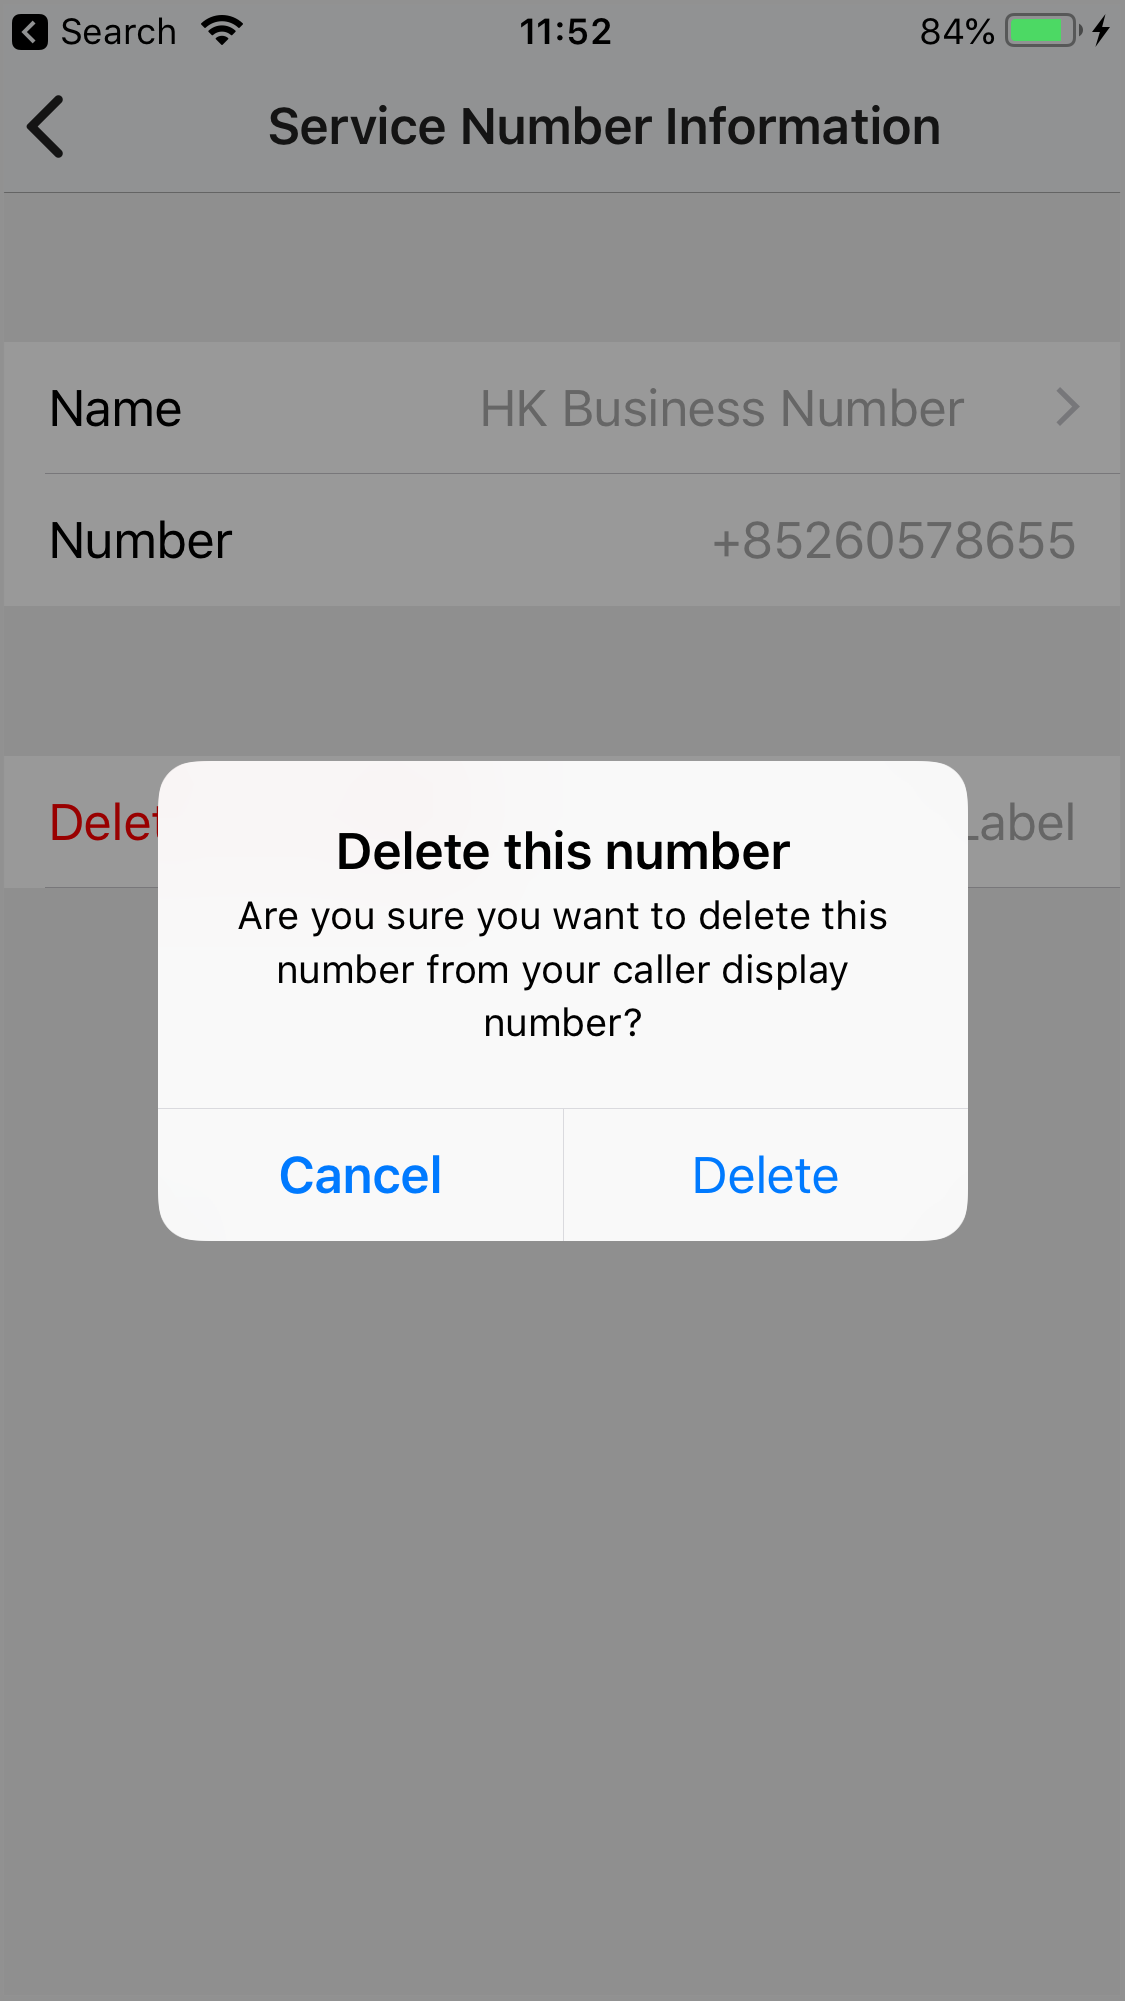 Delete Service Number Confirmation